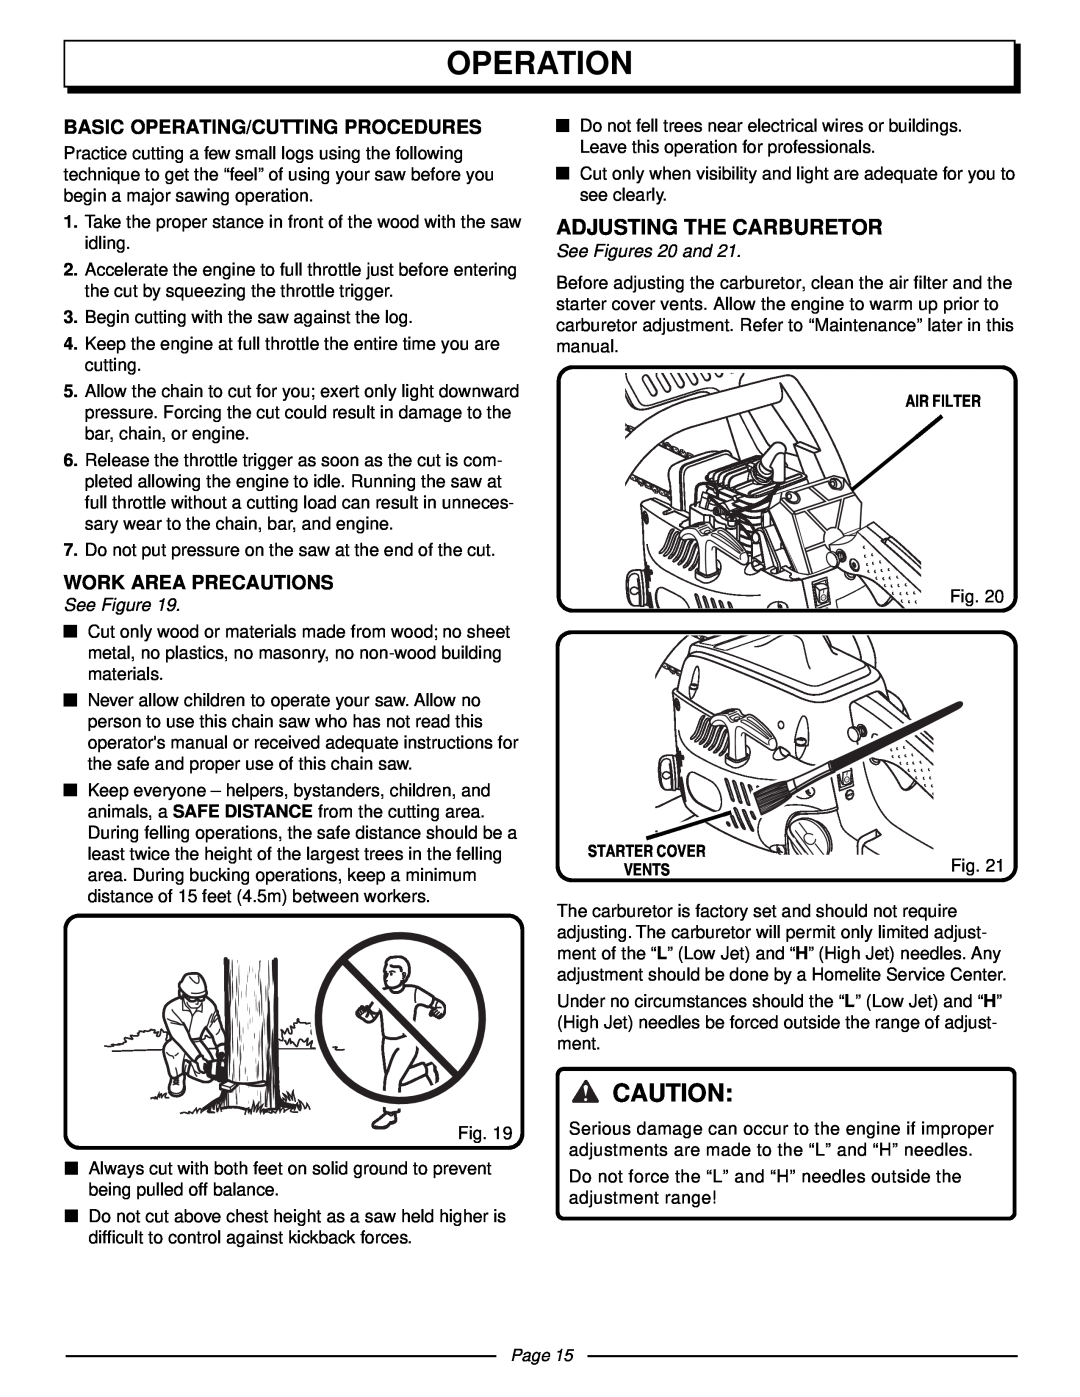 Homelite UT10510 Adjusting The Carburetor, Operation, Basic Operating/Cutting Procedures, Work Area Precautions, Page 